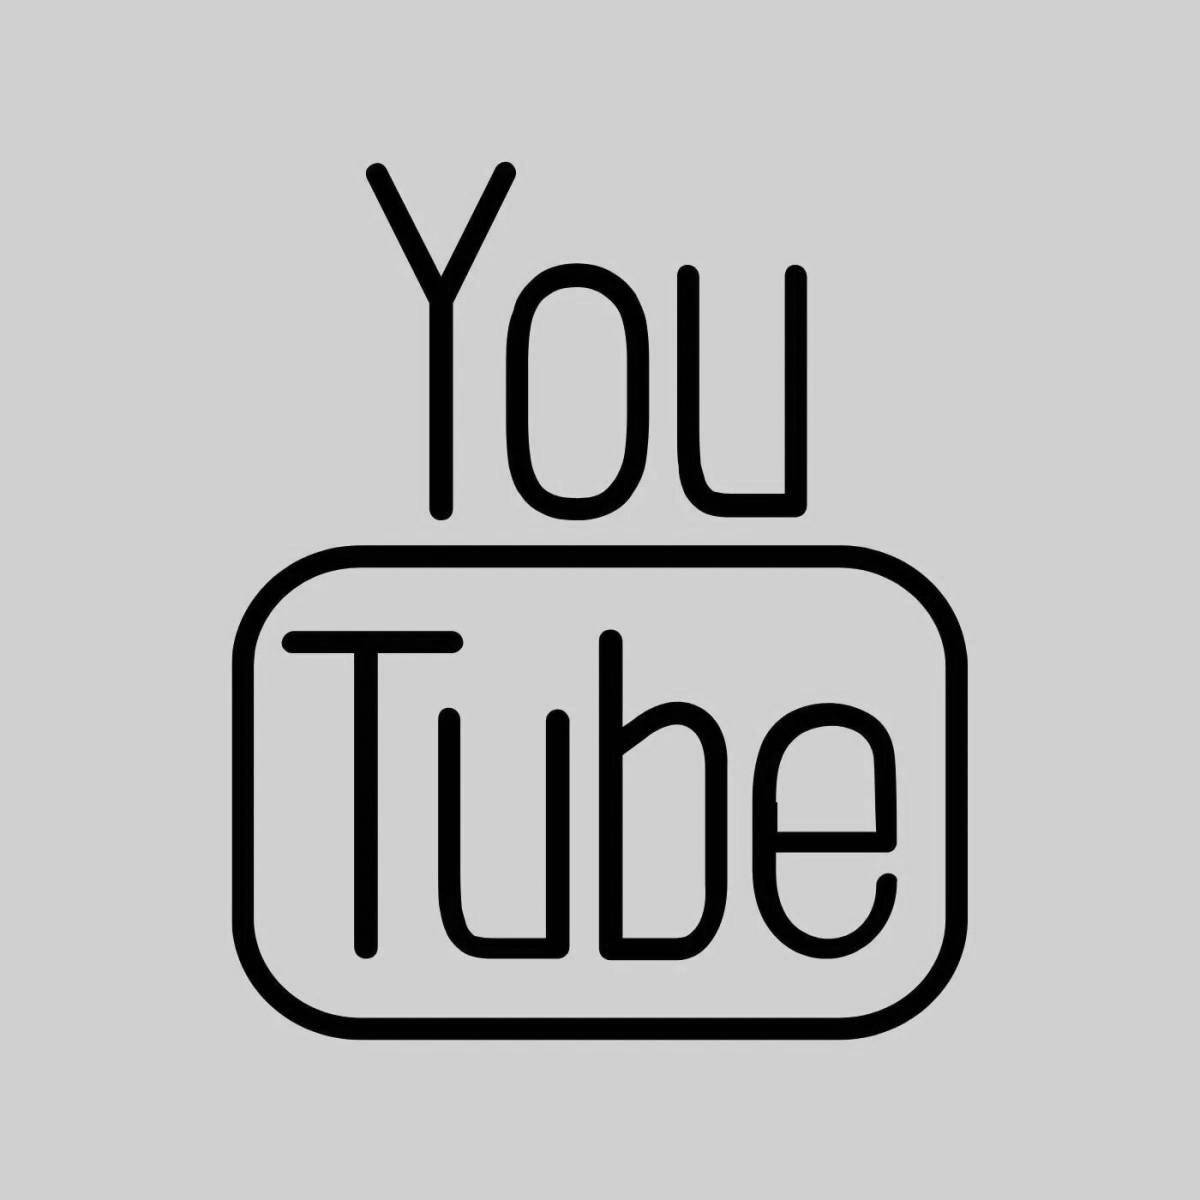 Fun youtube logo coloring